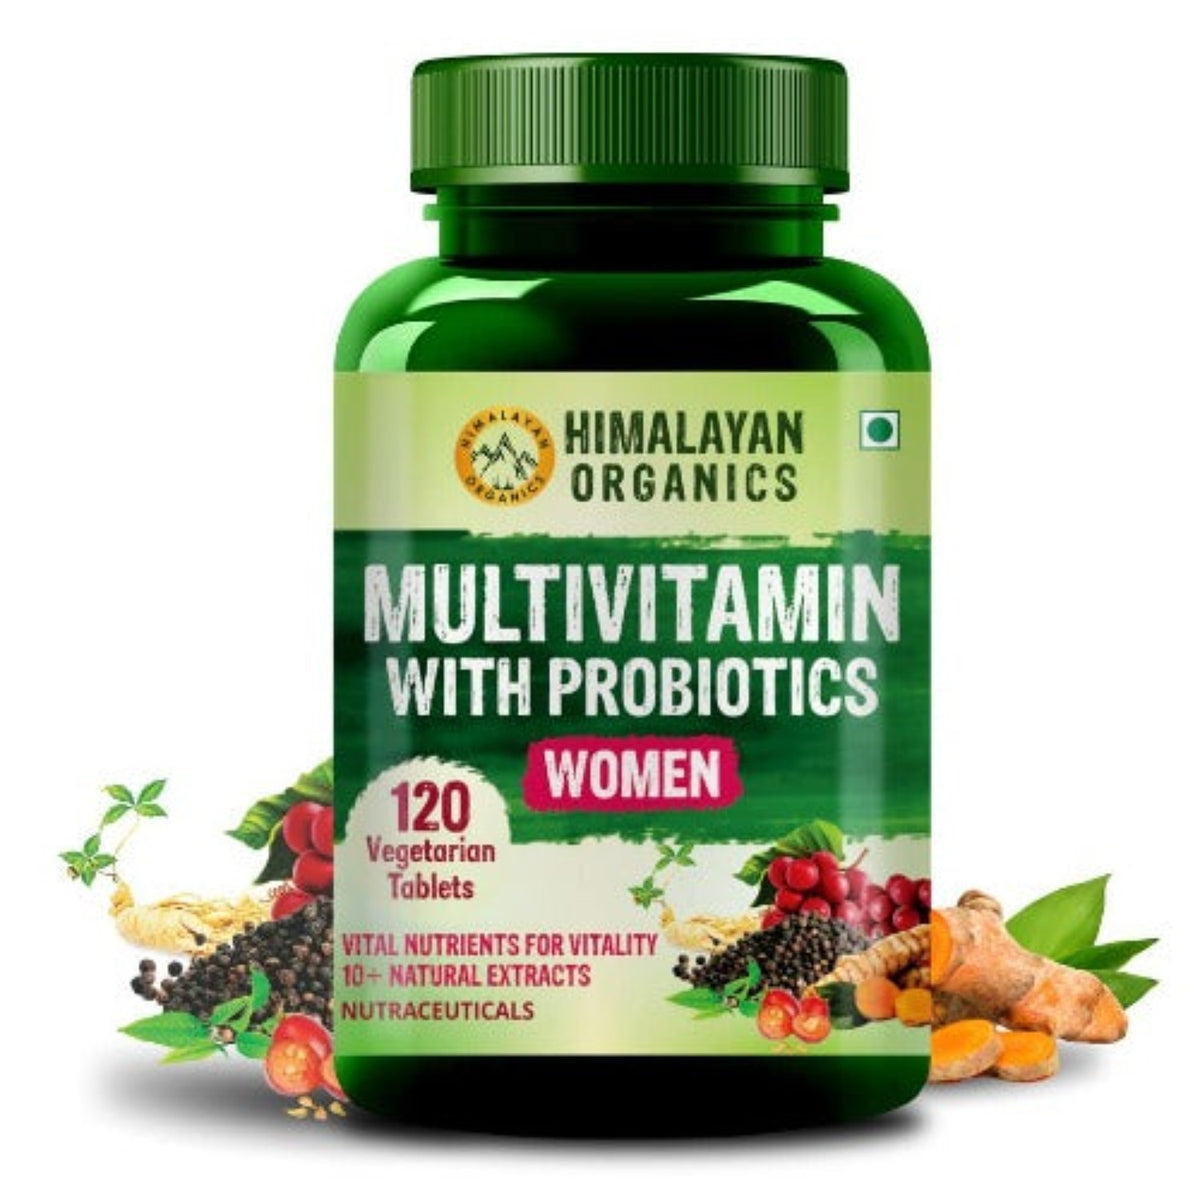 Himalayan Organics Multivitamin With Probiotics For Women 120 Vegetarian Tablets